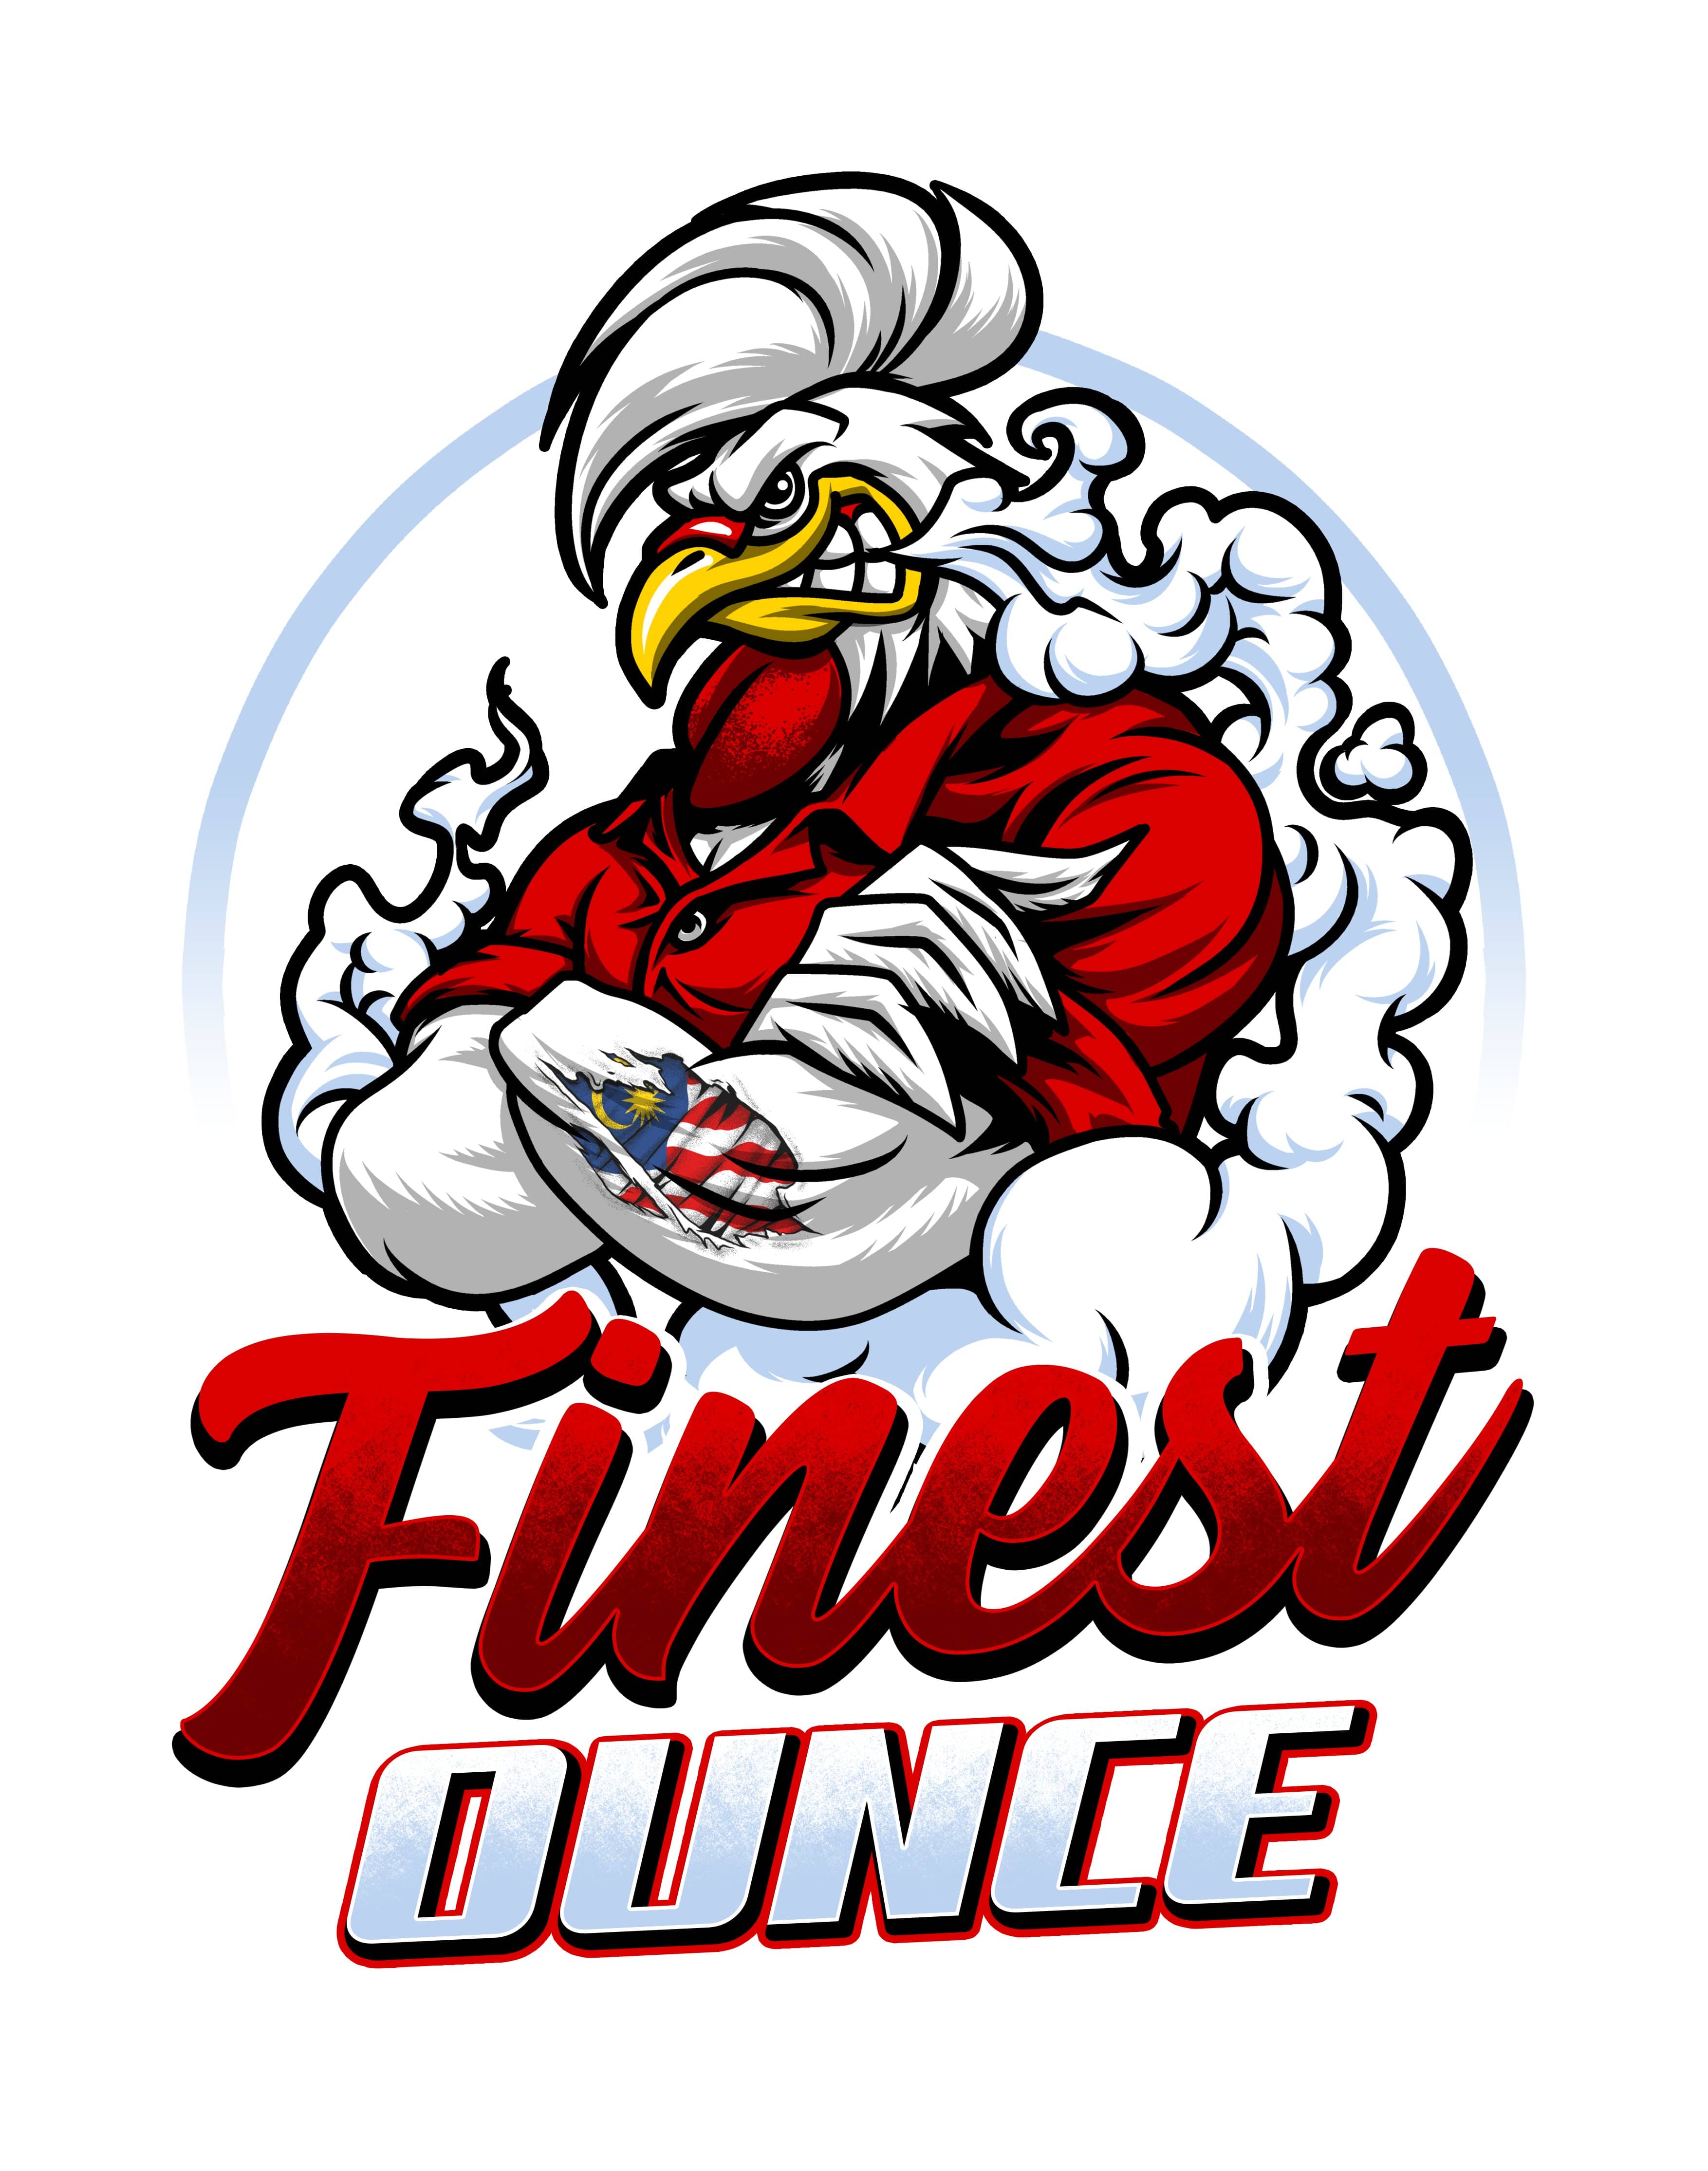 Logo FinestOUNCE